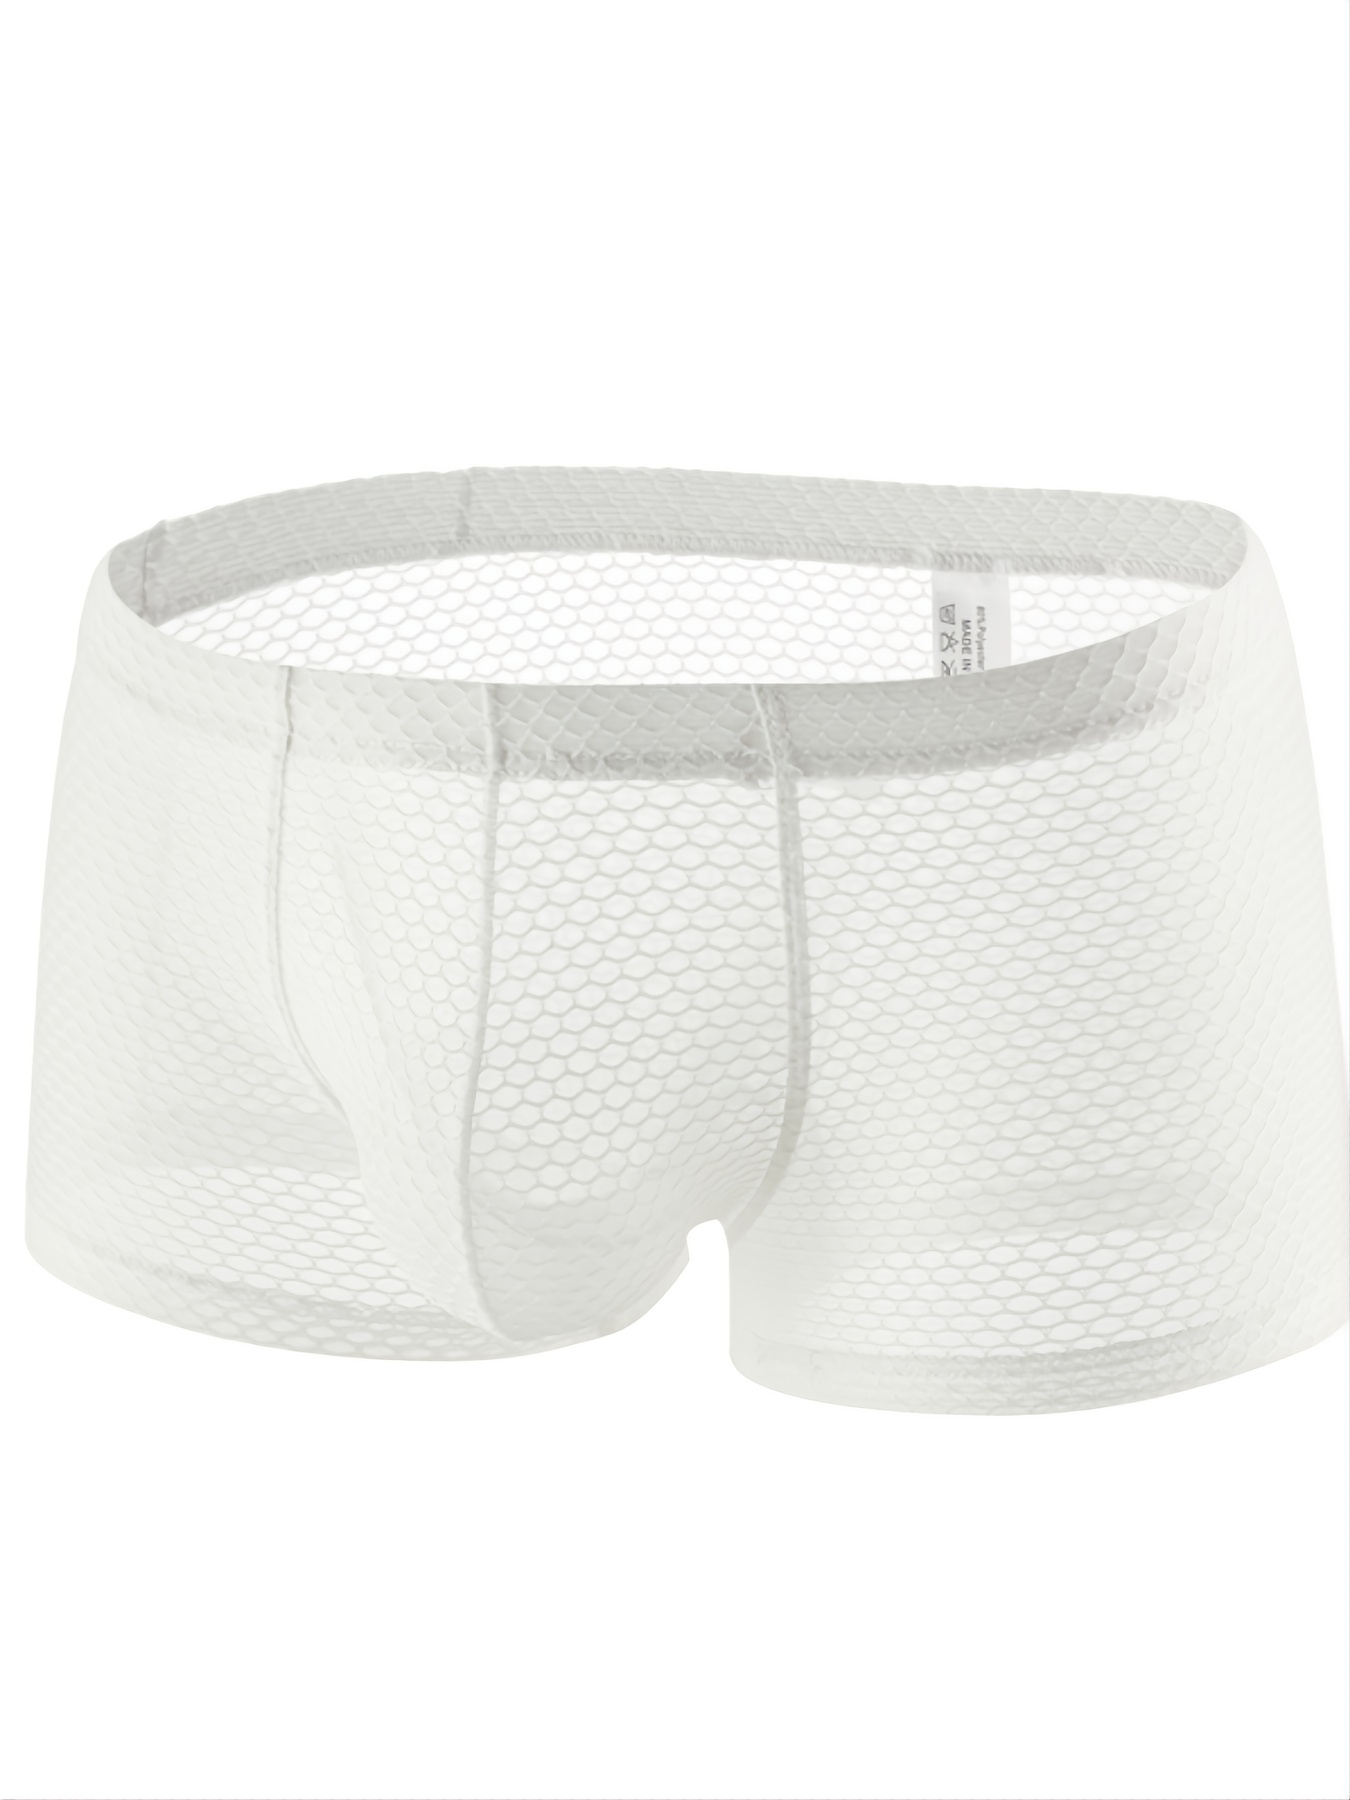 Mens see through Underwear mesh Pants transparent Boxer underpant